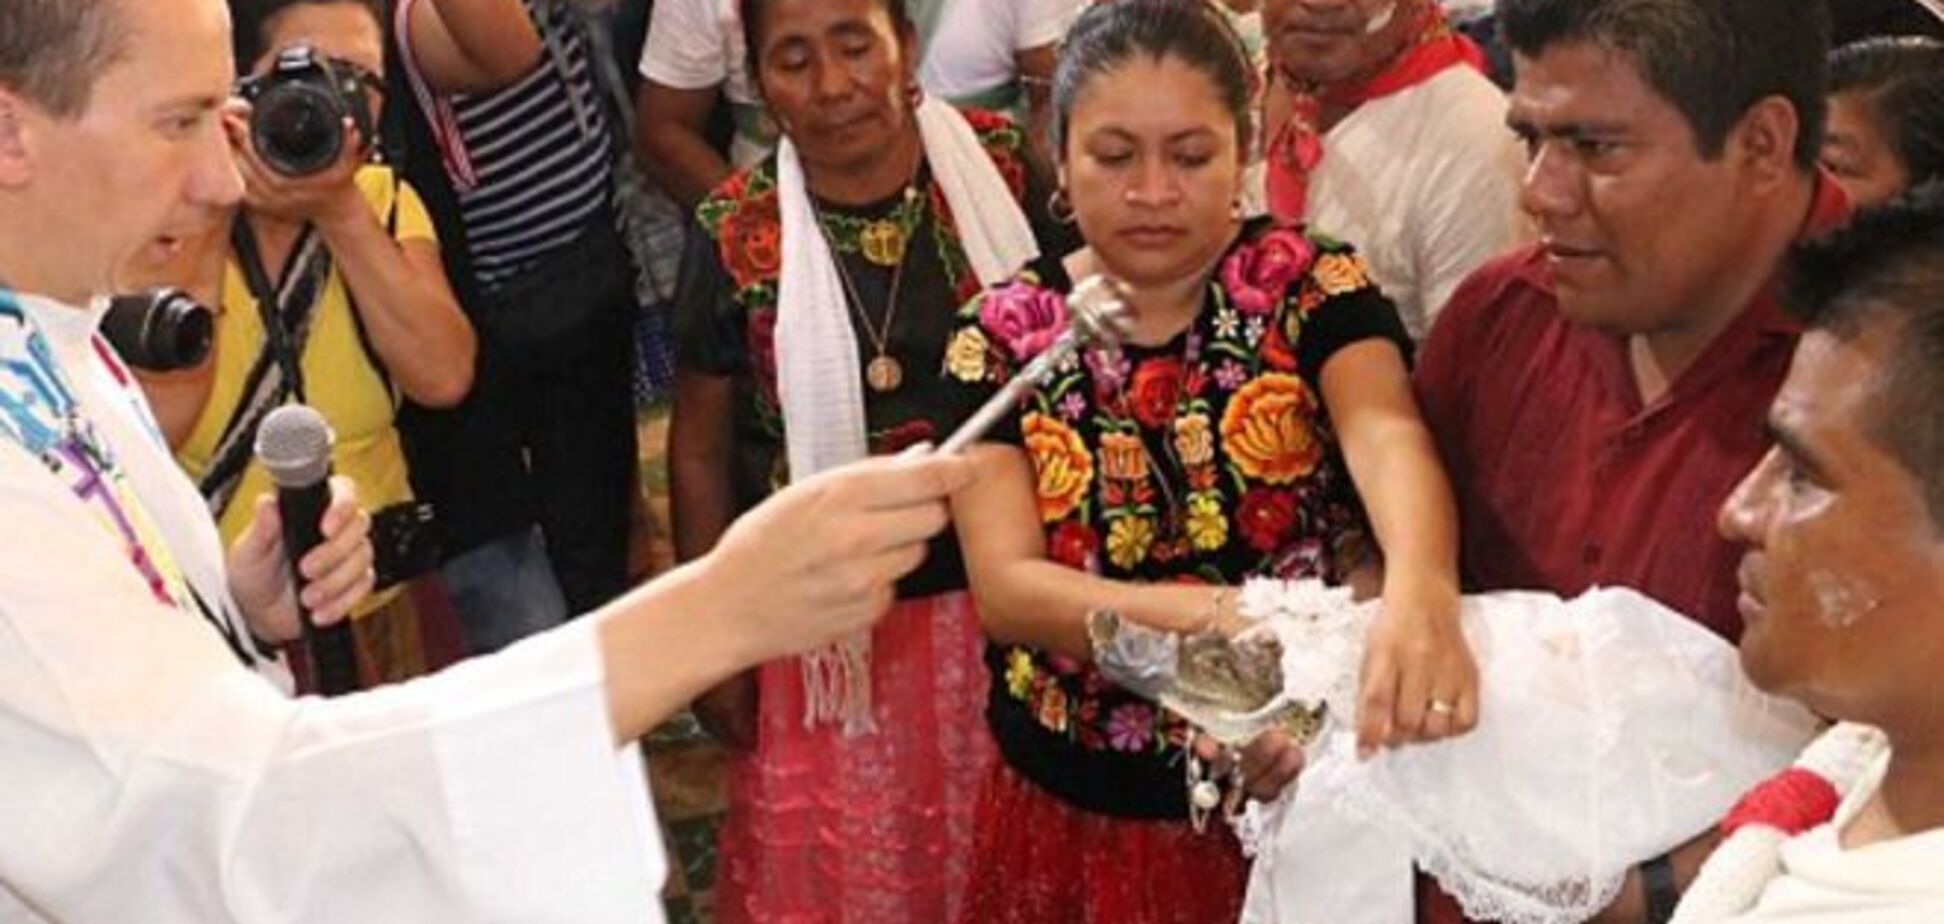 В Мексике мэр города взял замуж крокодила. Фото- и видеофакт